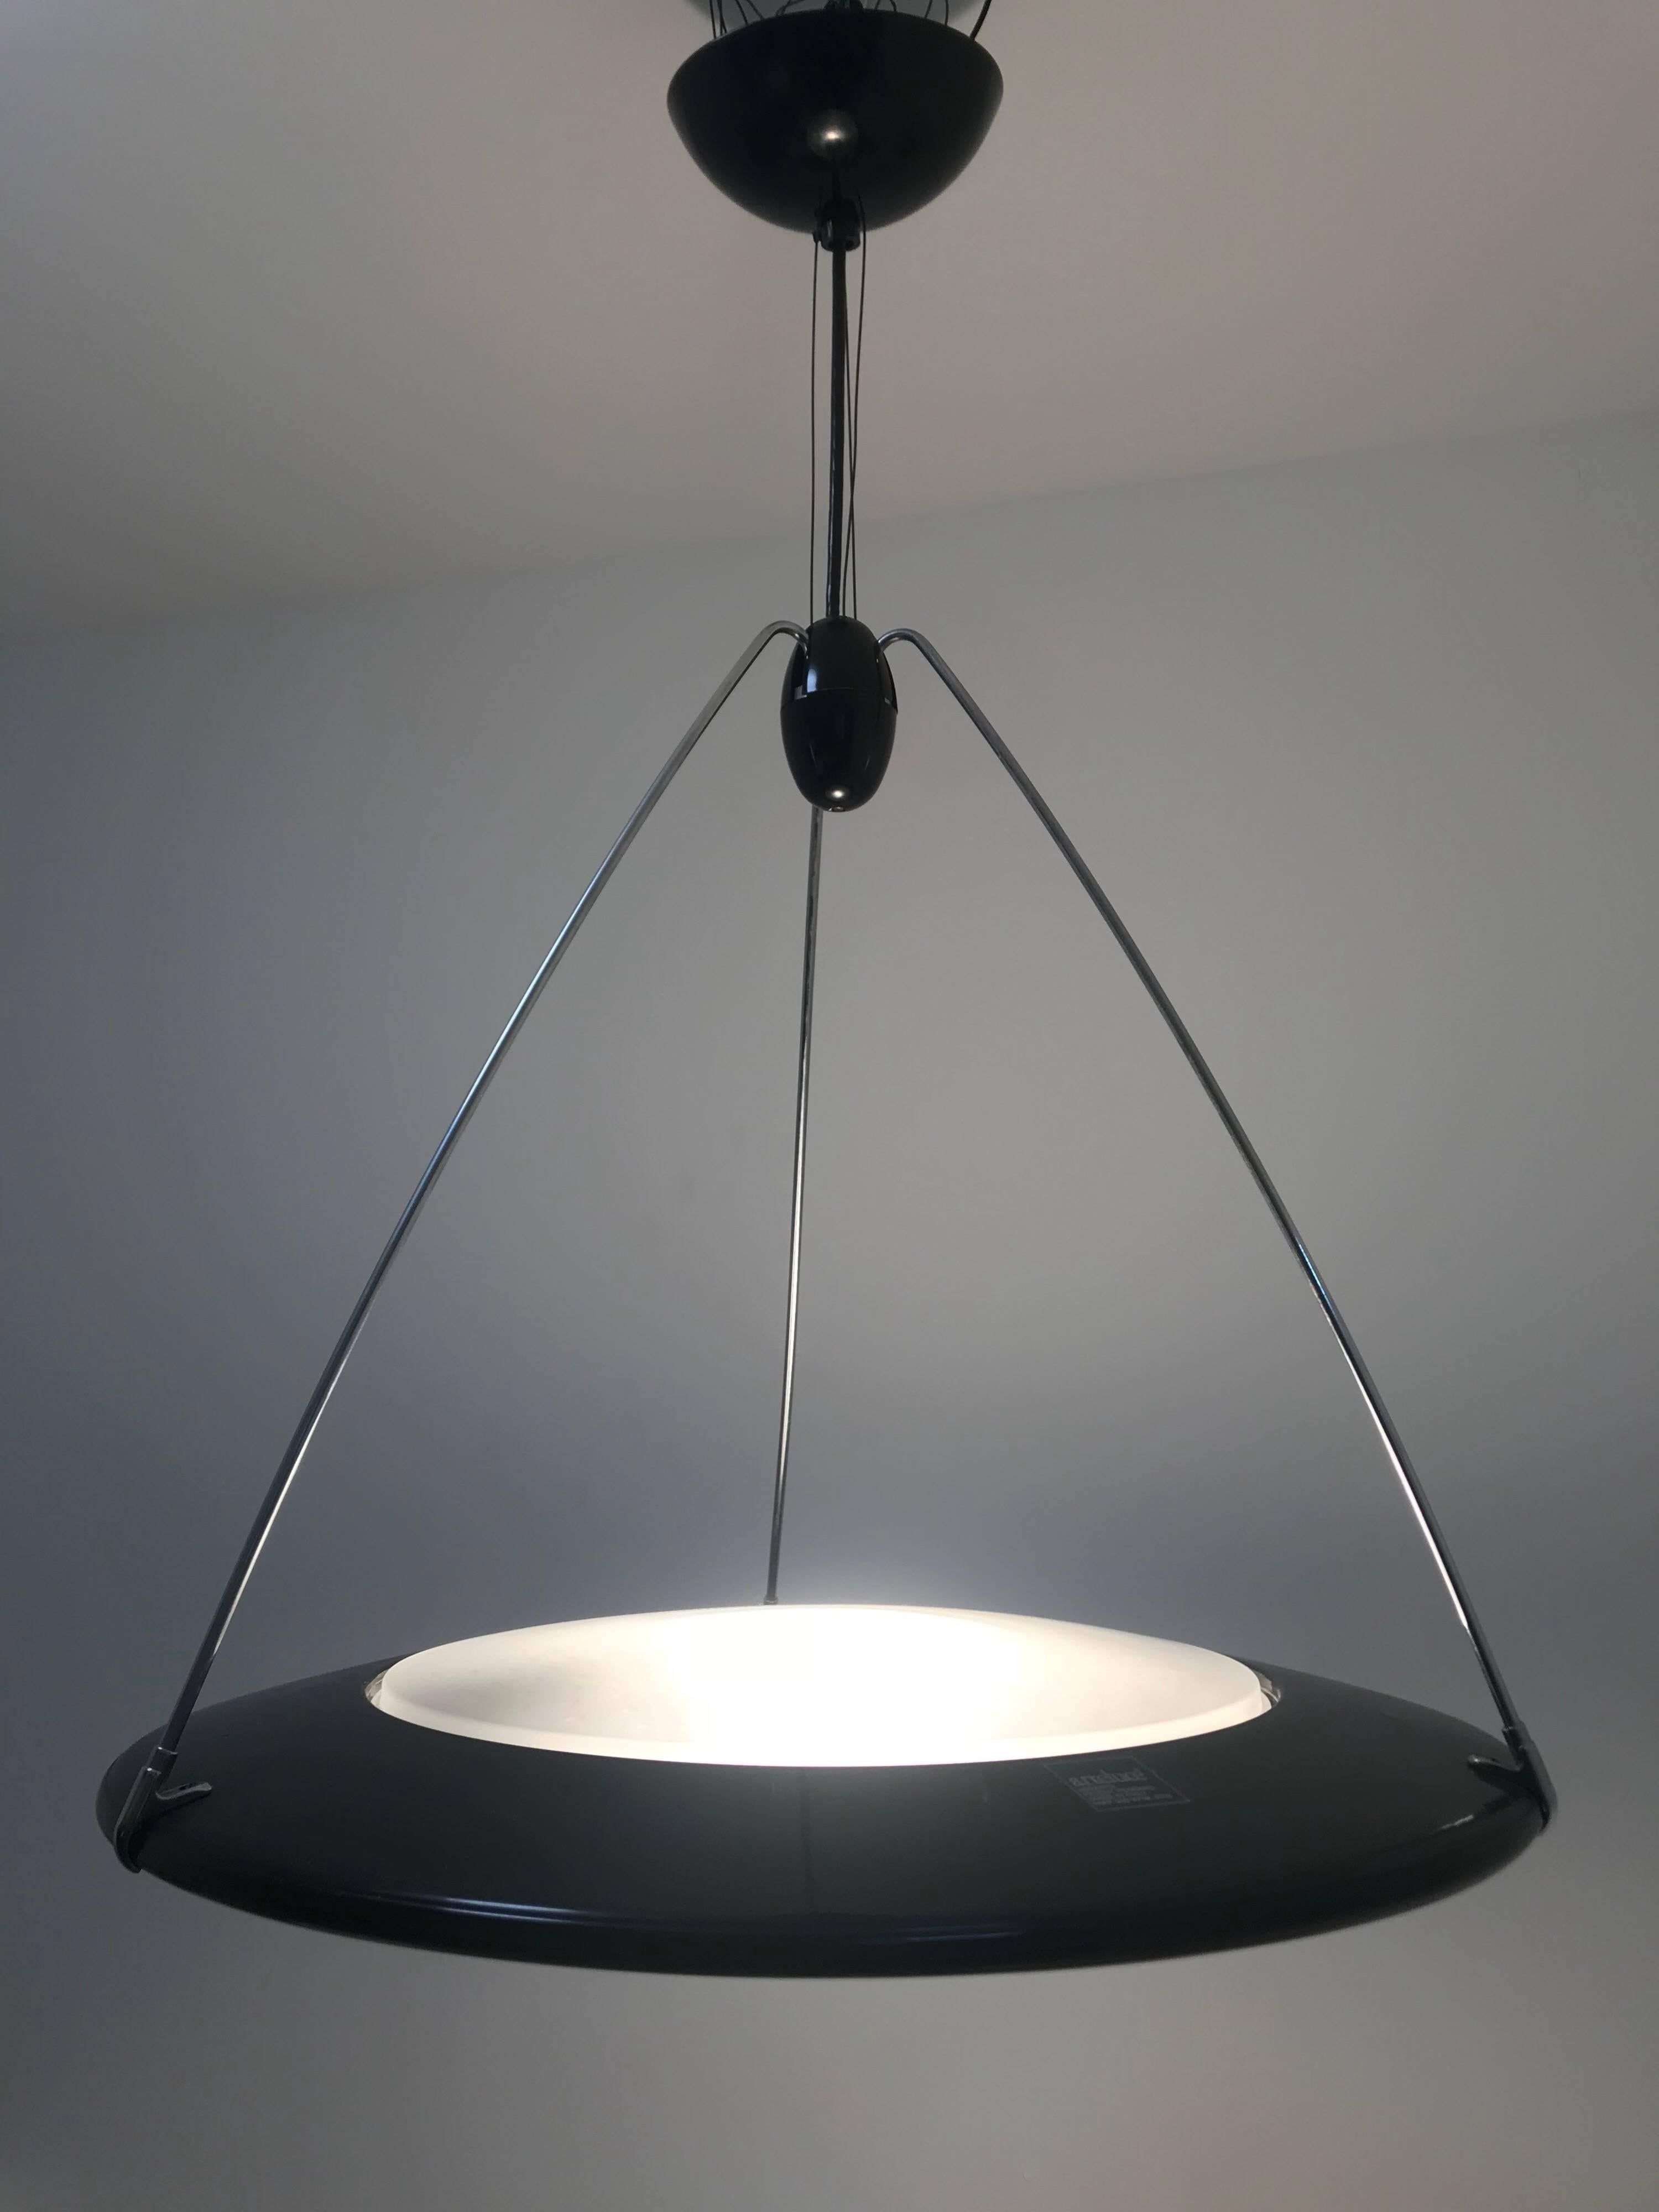 Postmodern UFO or flying saucer pendant light designed by Ezio Didone for Arteluce.